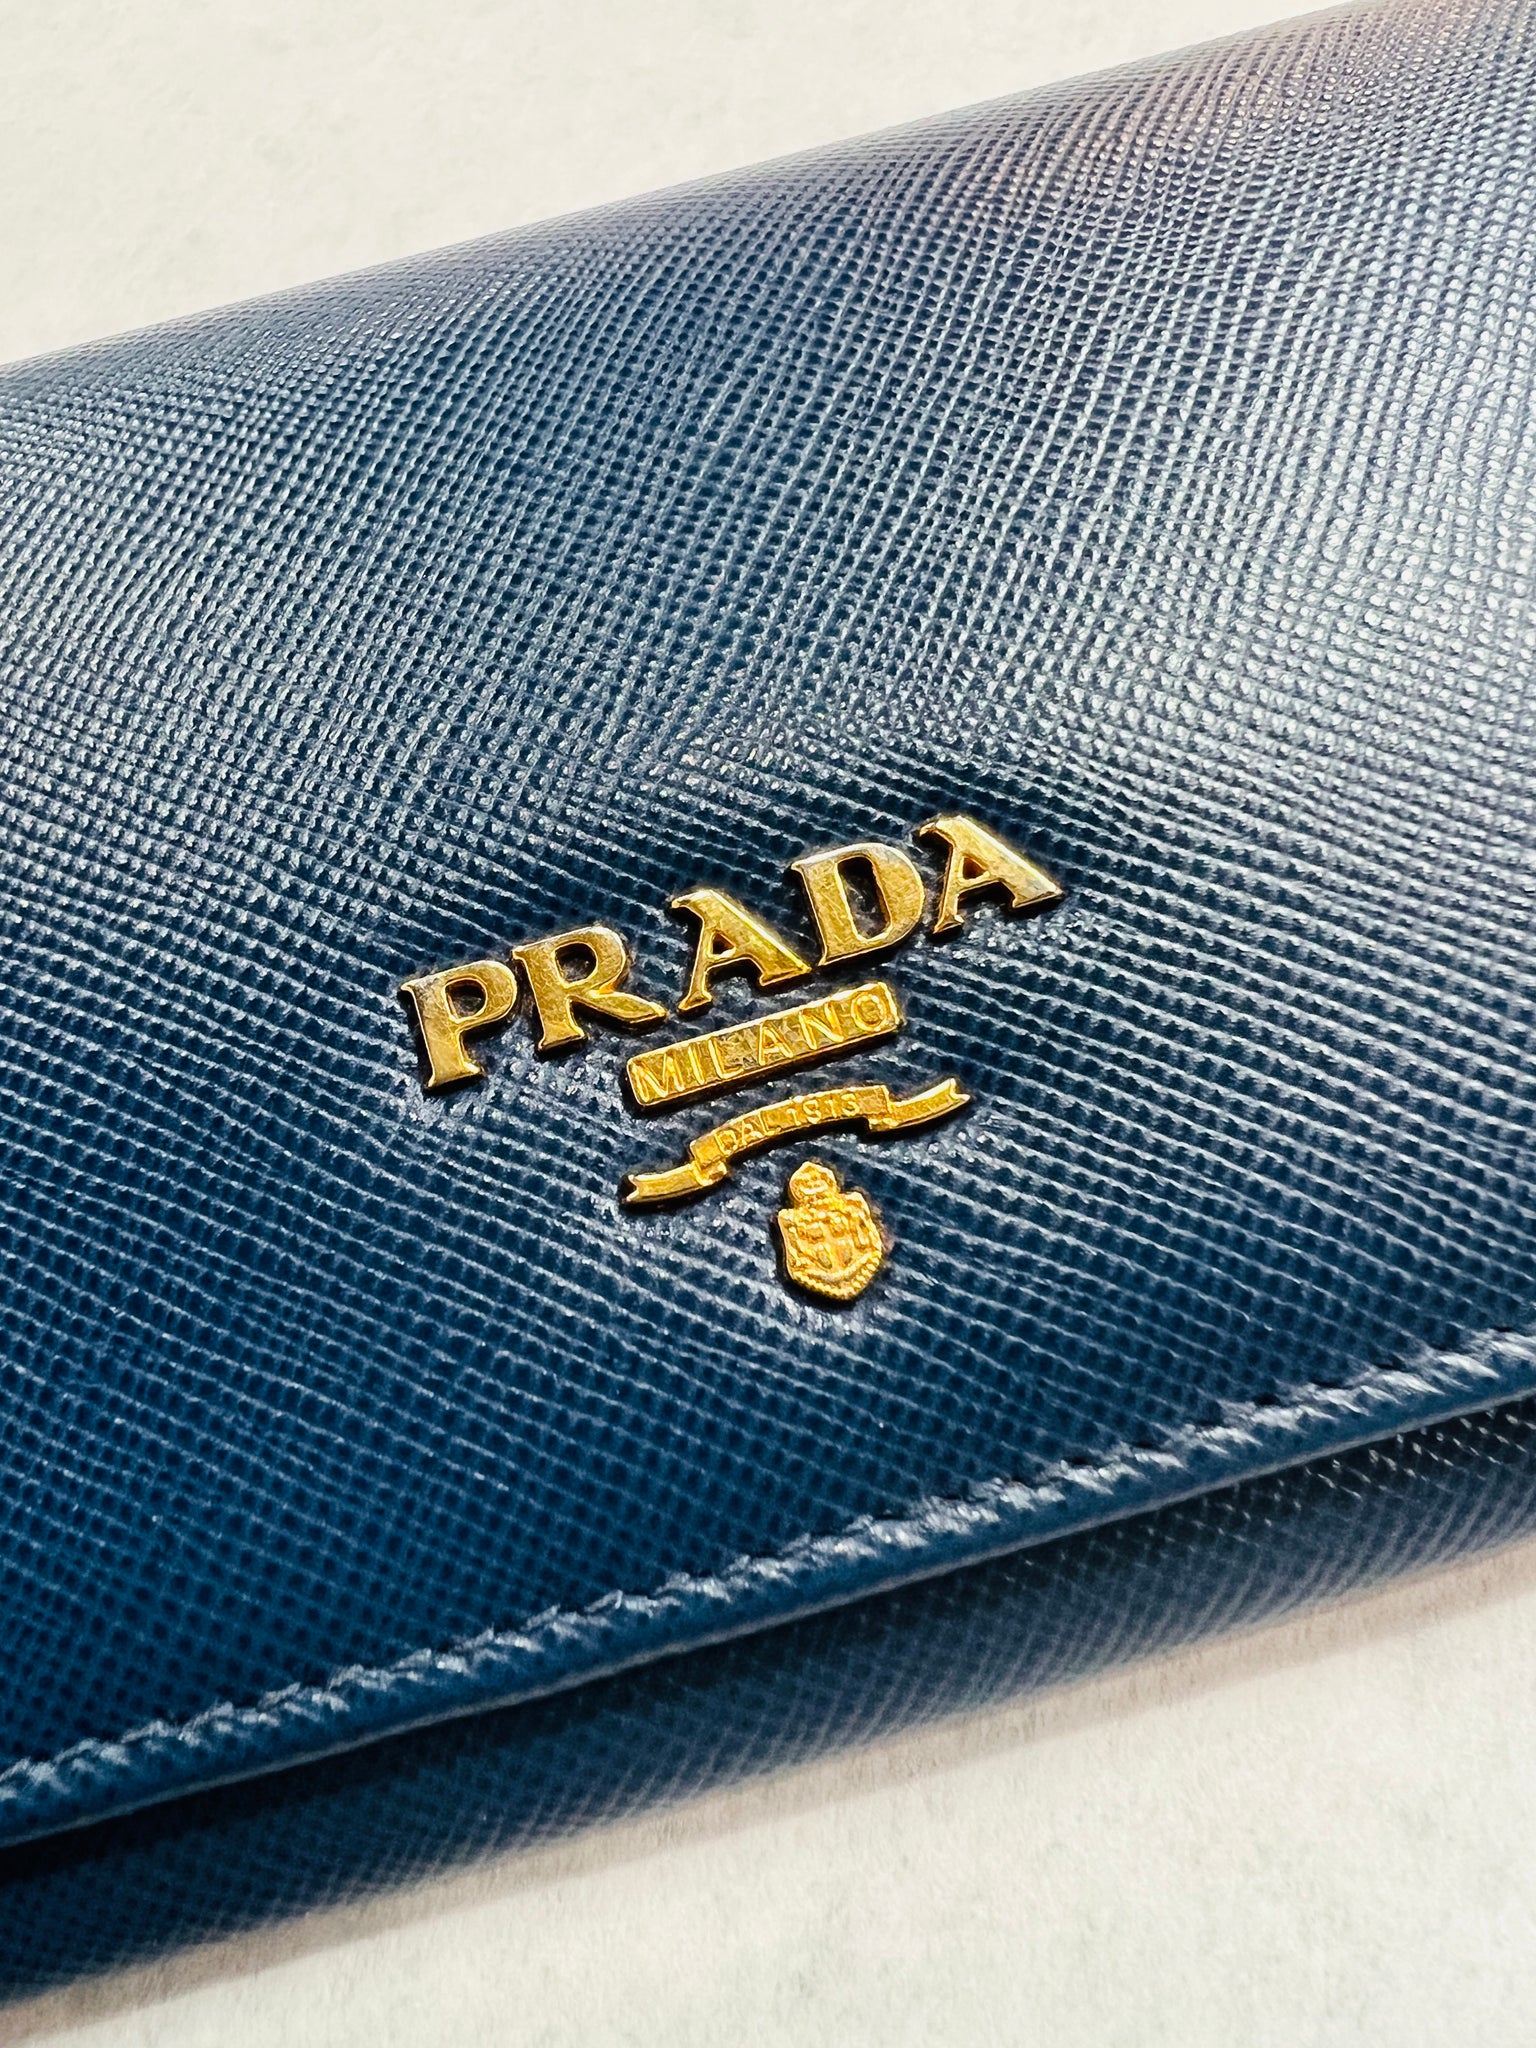 Prada Prada authentic wallet voyage blue - Gem